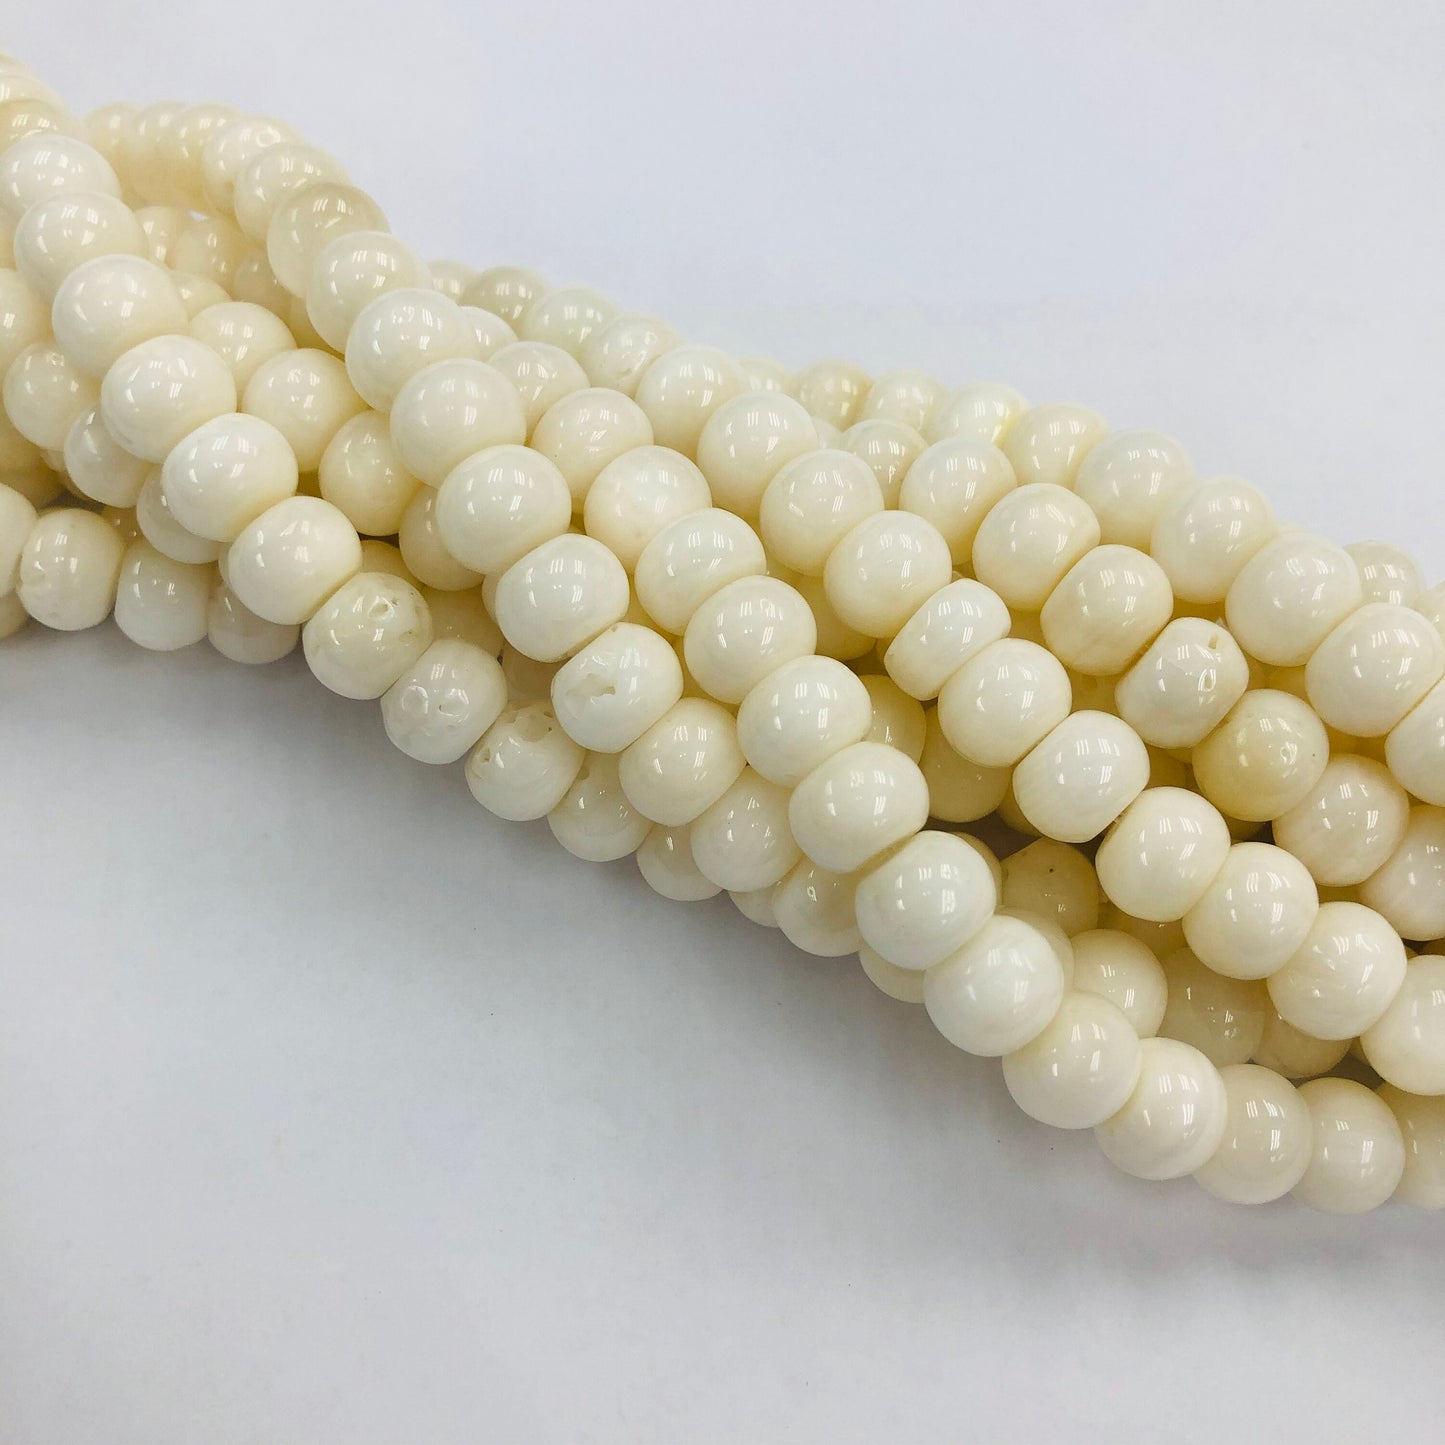 Natural Wampum Quahog Shell Rondelle beads 4x10mm white color